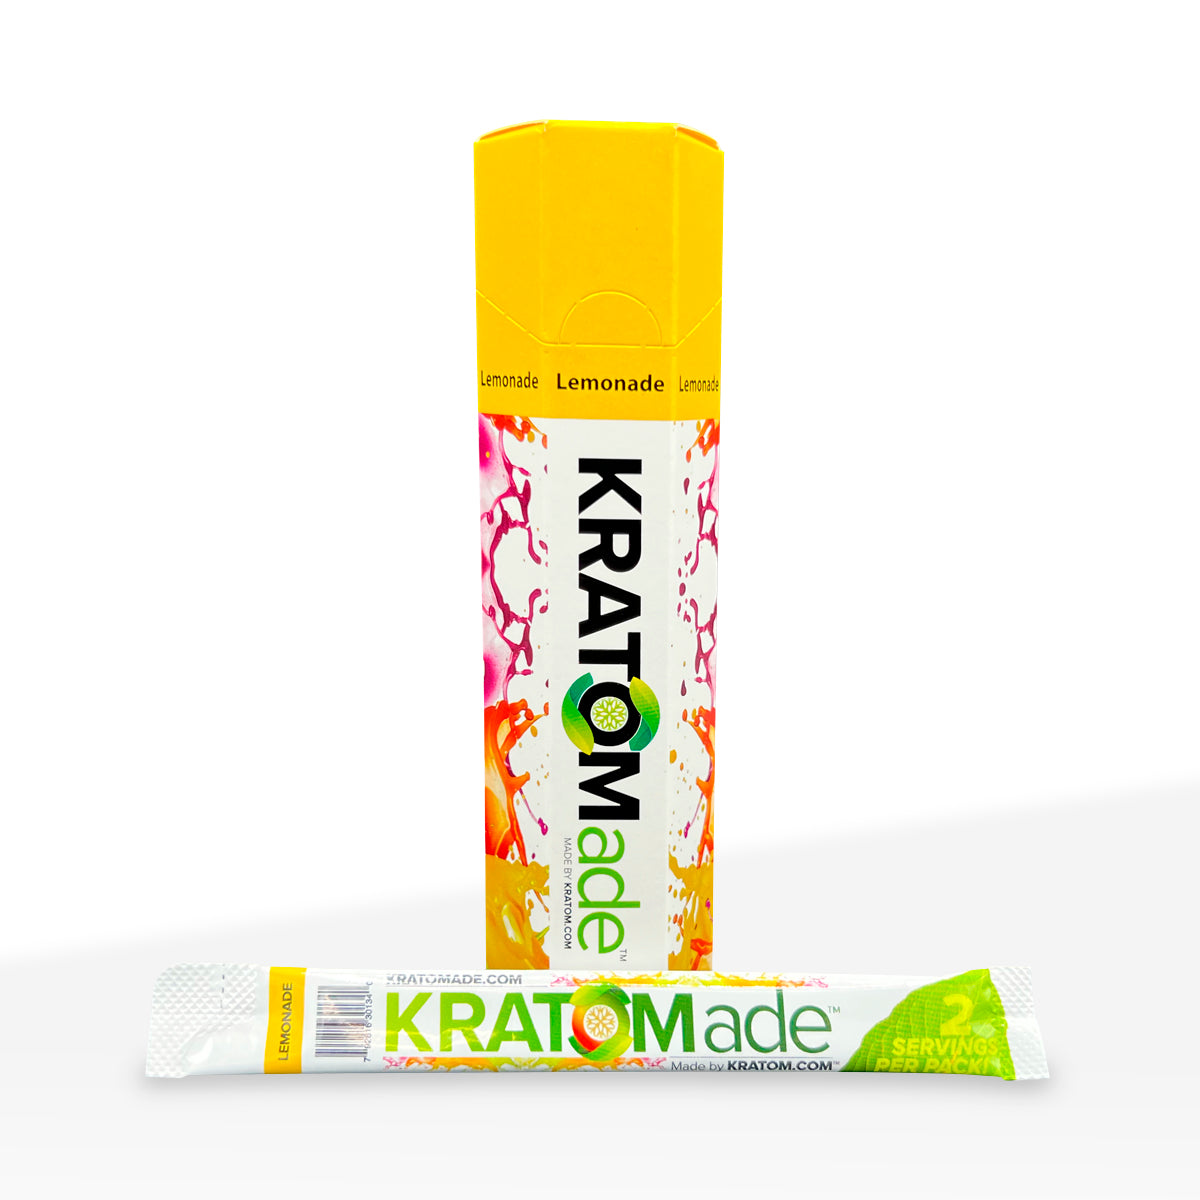 KratomADE Kratom 100mg Powder in Lemonade